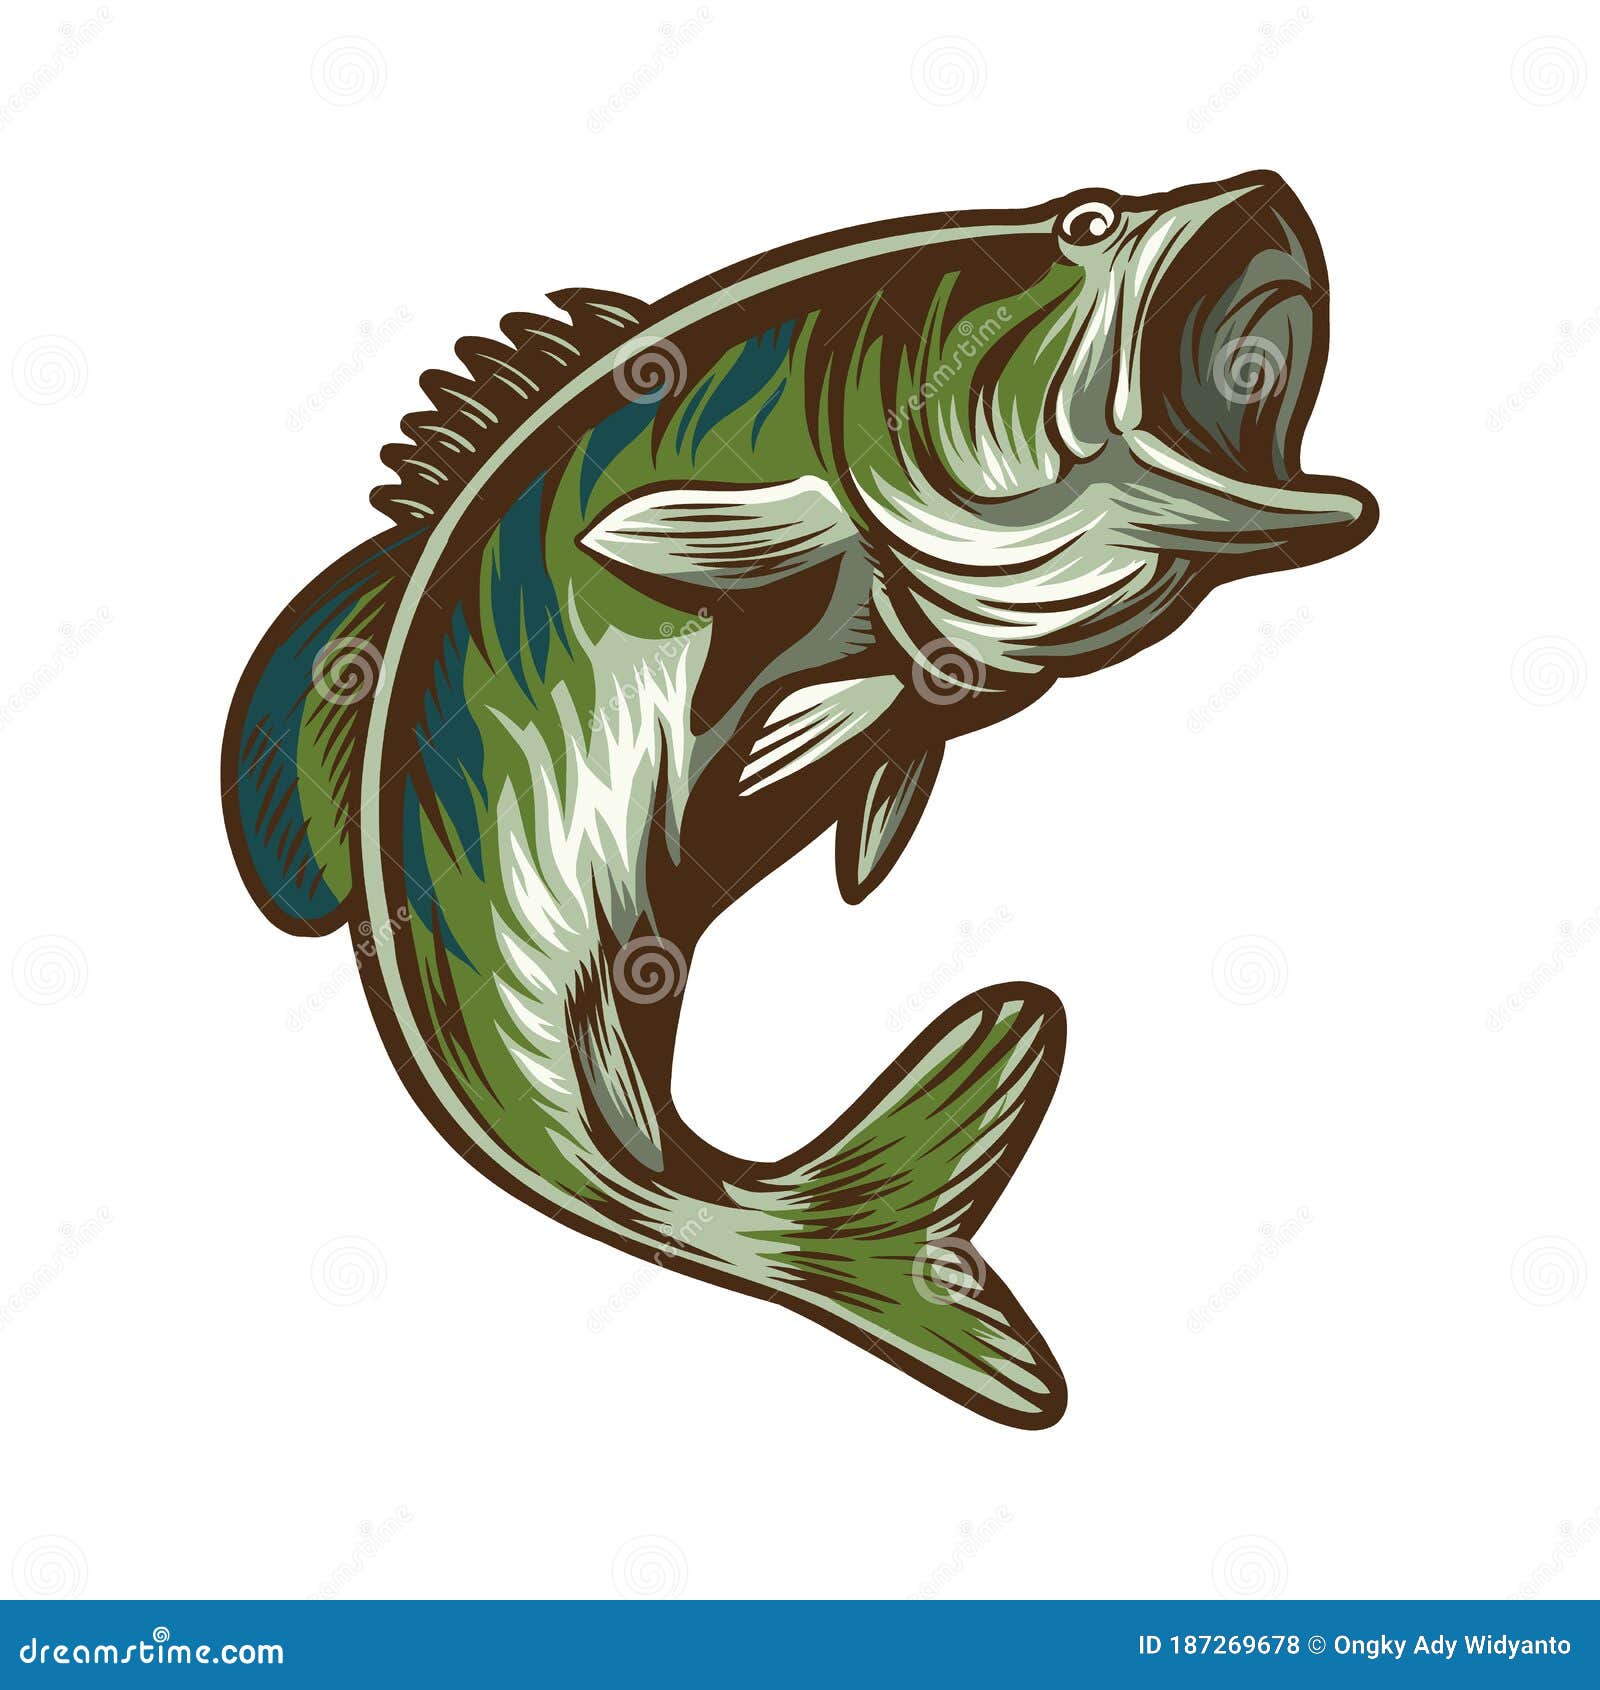 Bass Fish Fishing Vector Illustration Design Isolated on White Background  Stock Vector - Illustration of predator, hook: 187269678